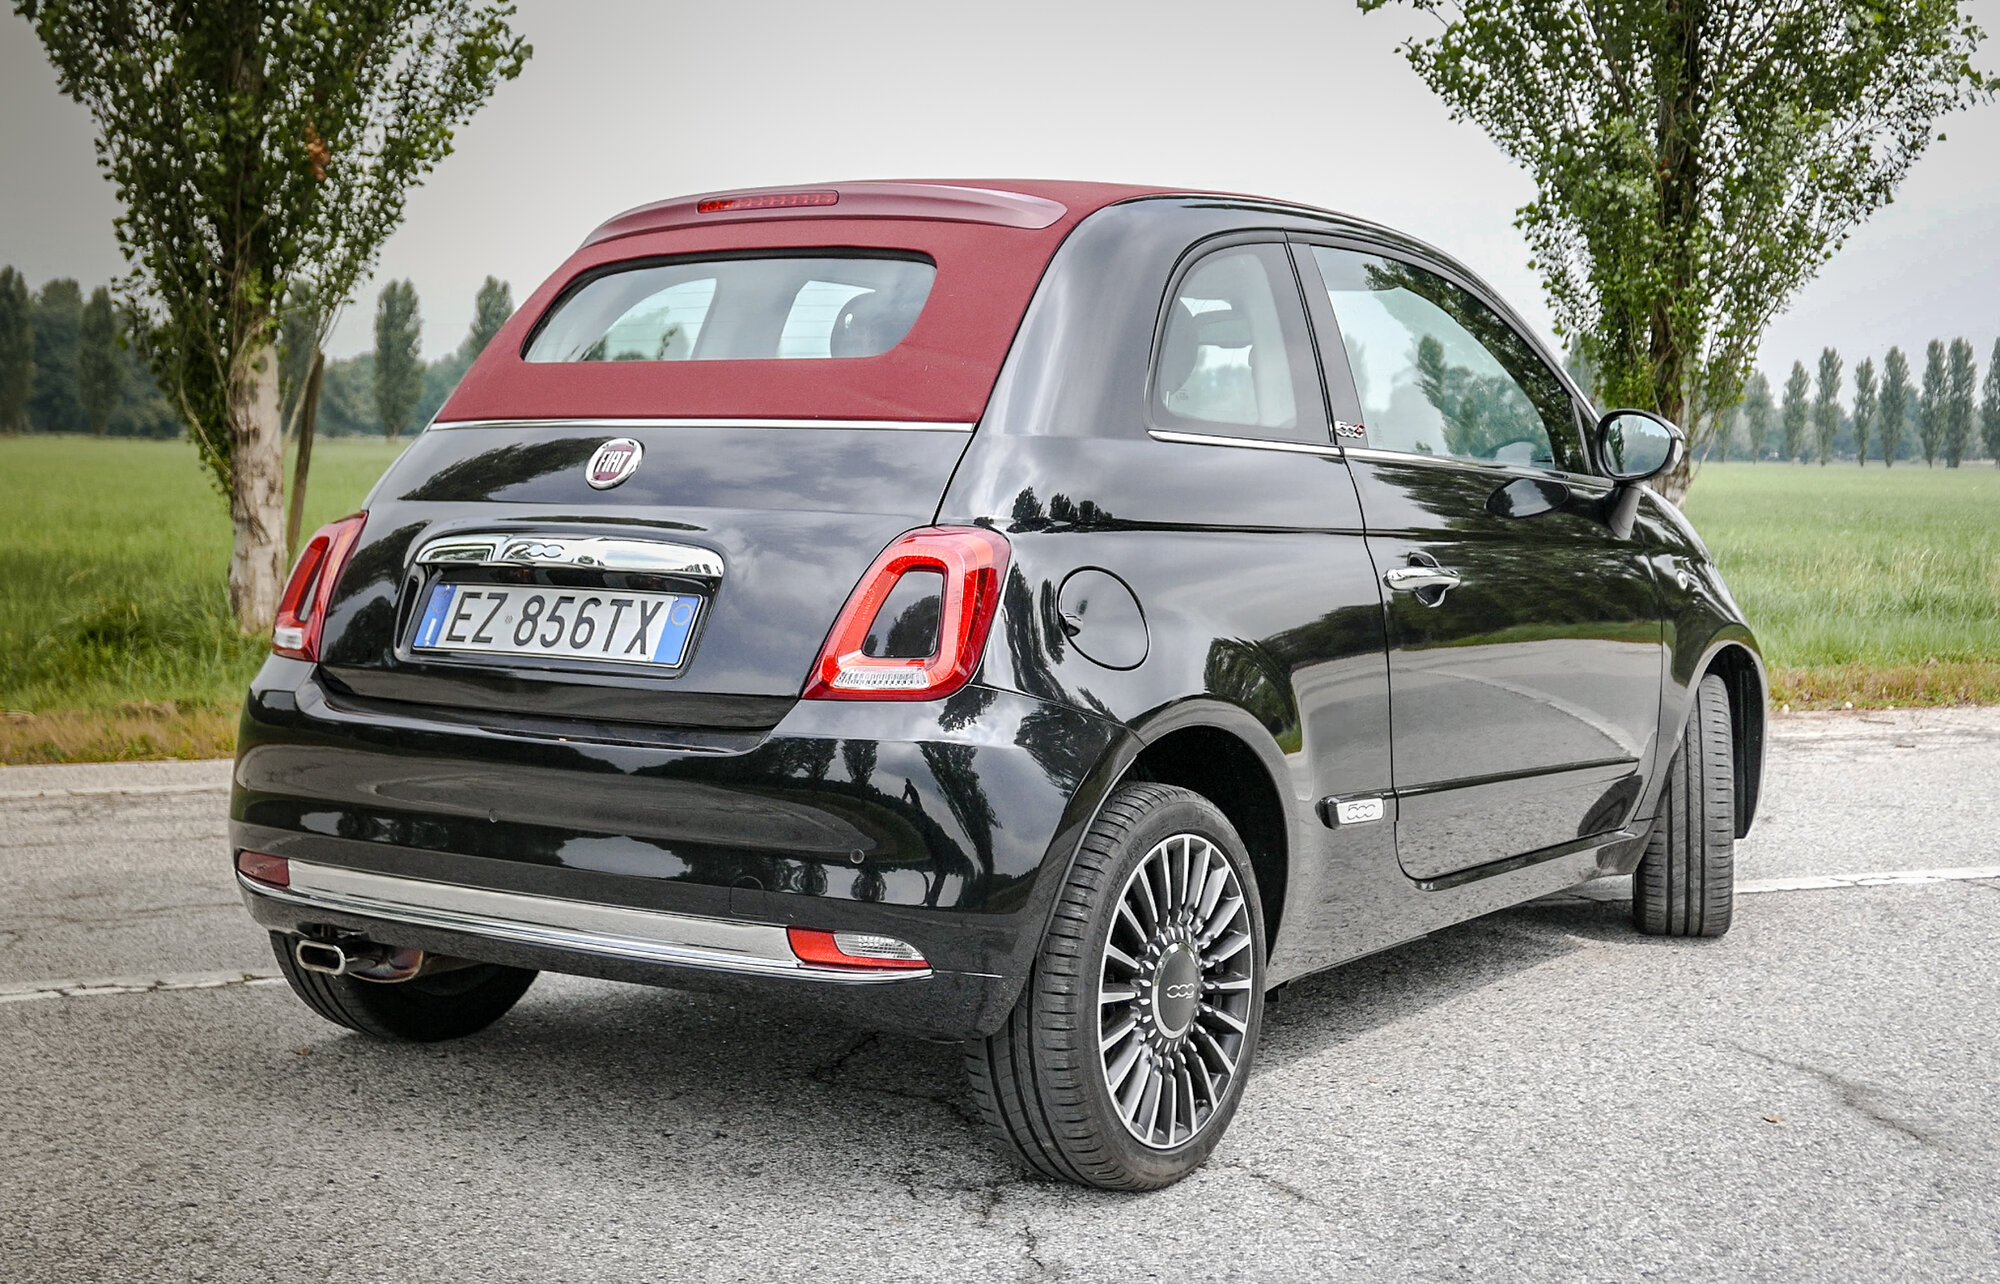 Fiat 500 C 2016 - On ne change pas une équipe qui gagne